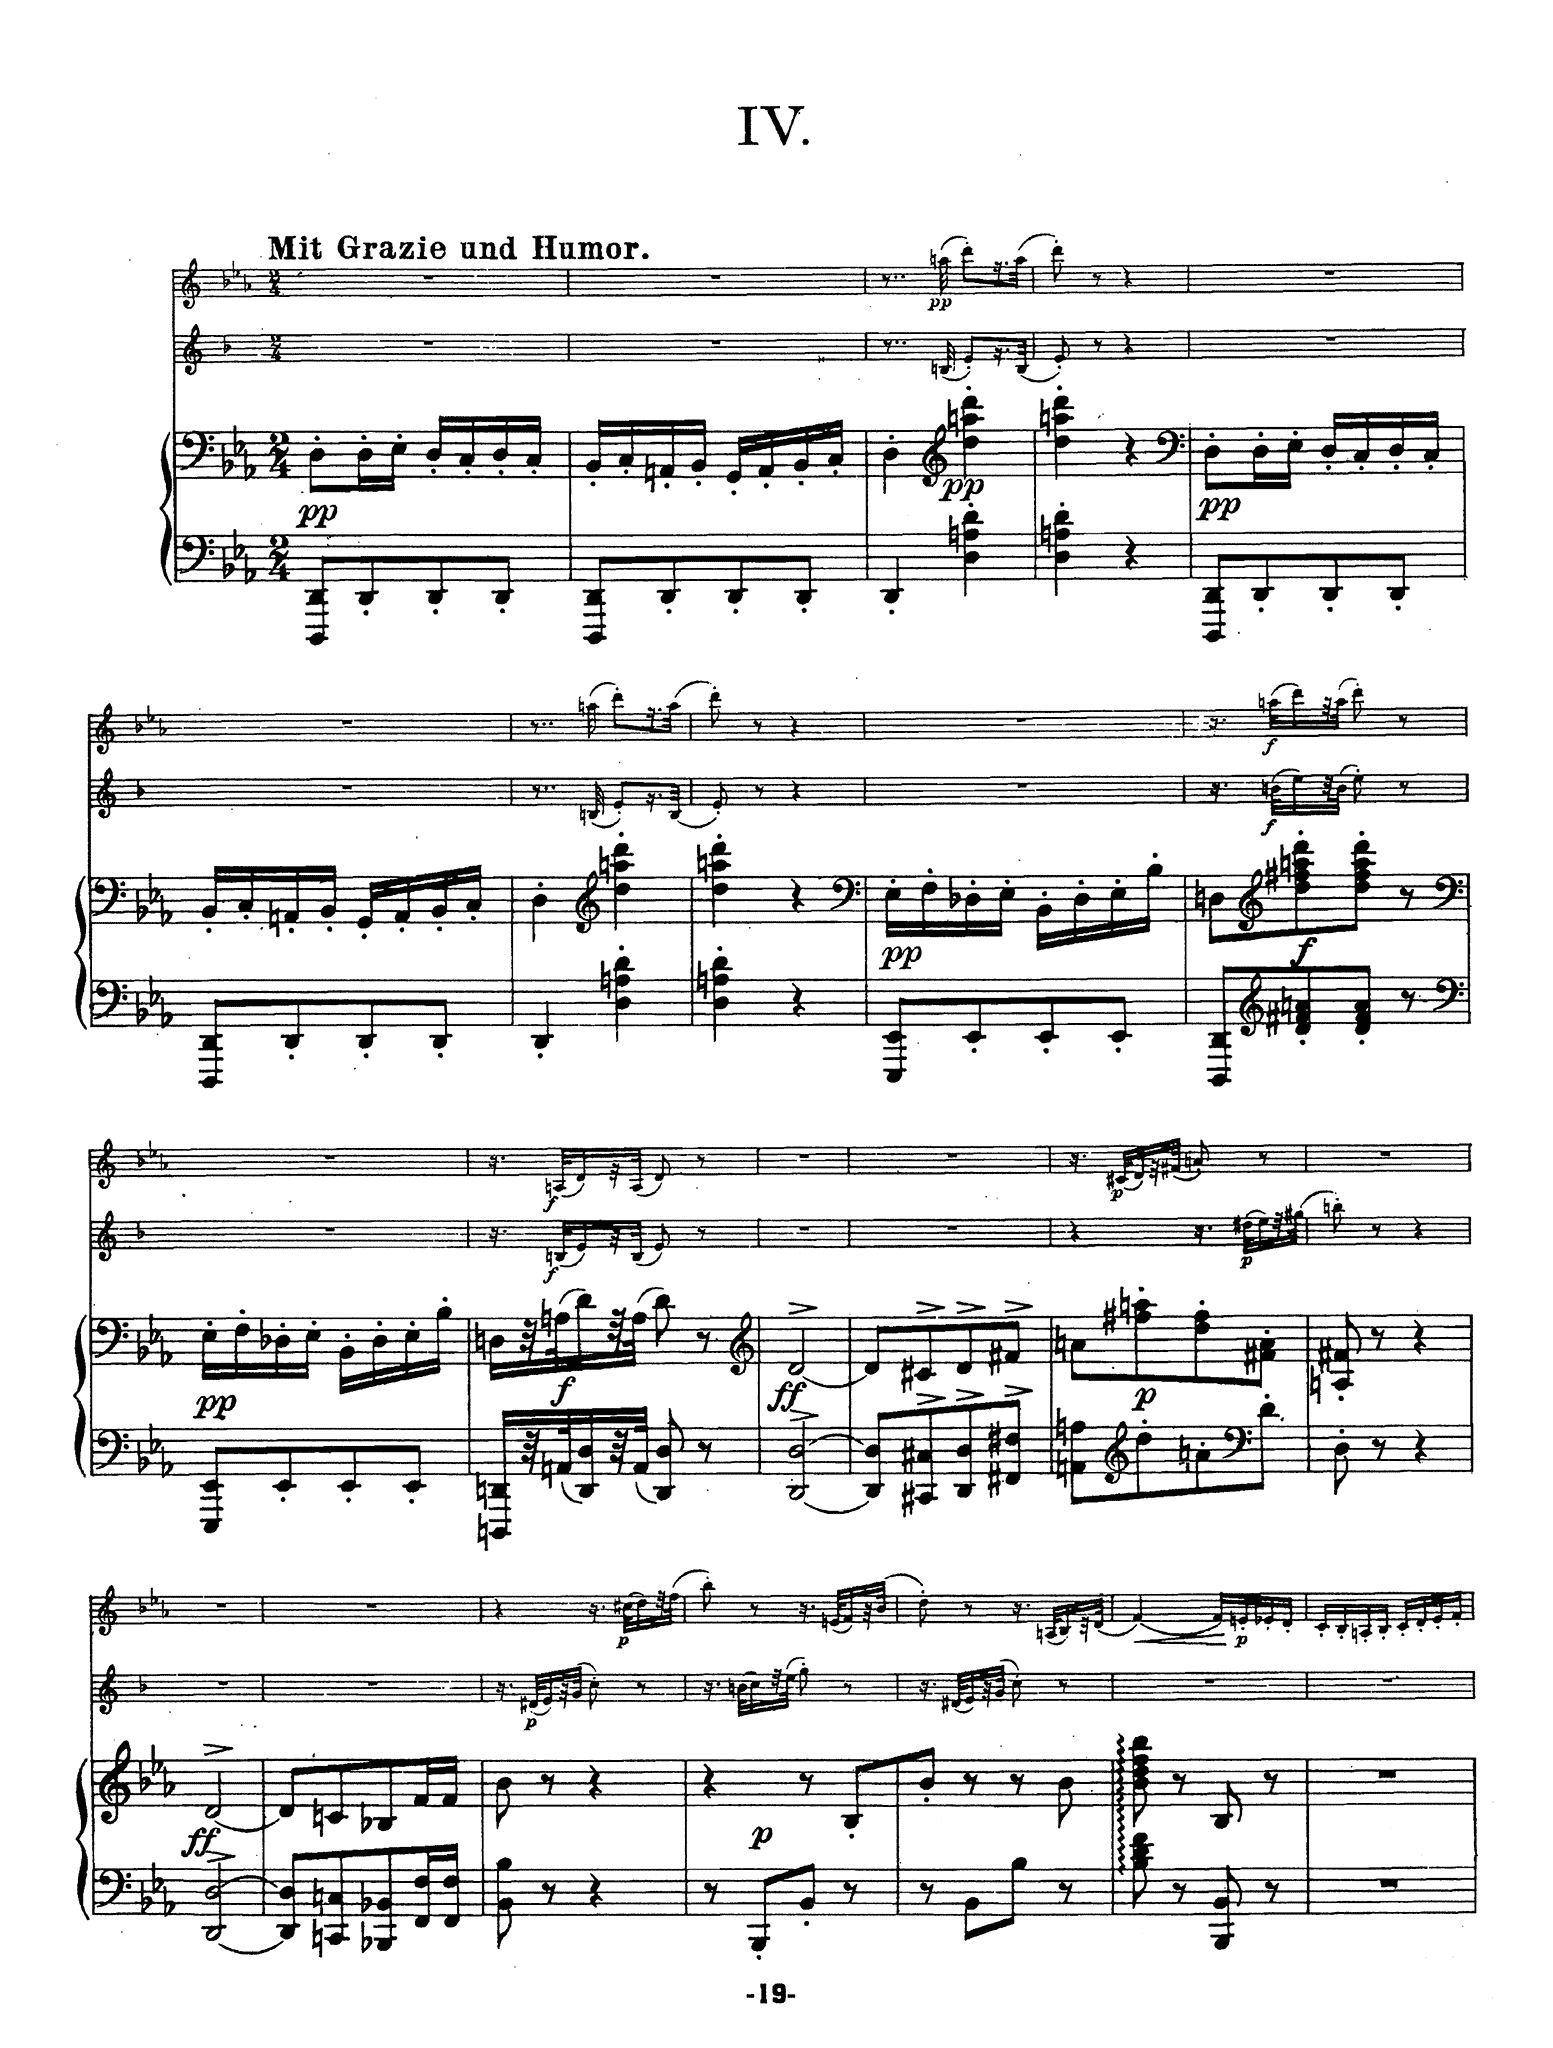 Baussnern Serenade in 4 Movements clarinet violin piano trio - Movement 4